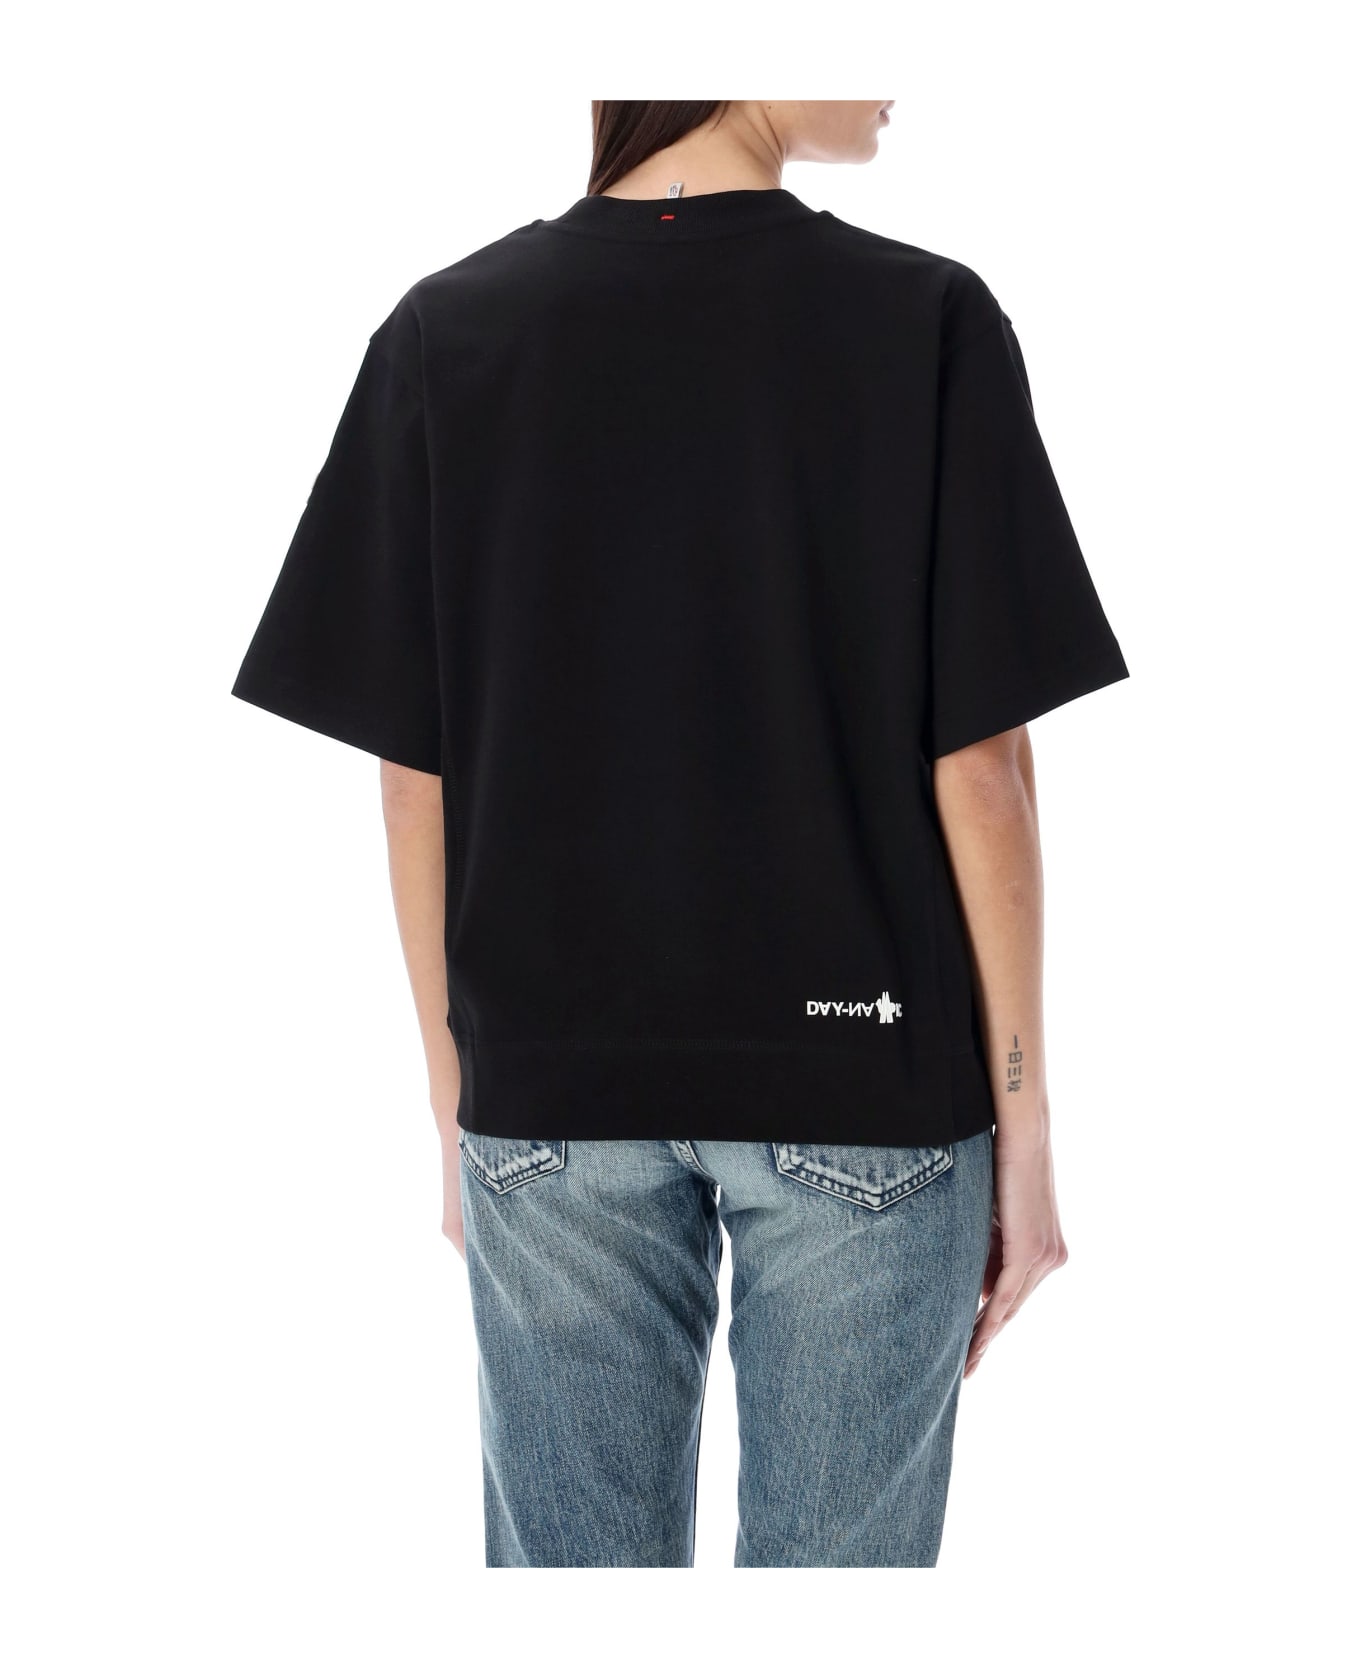 Moncler Grenoble T-shirt Tmm - BLACK